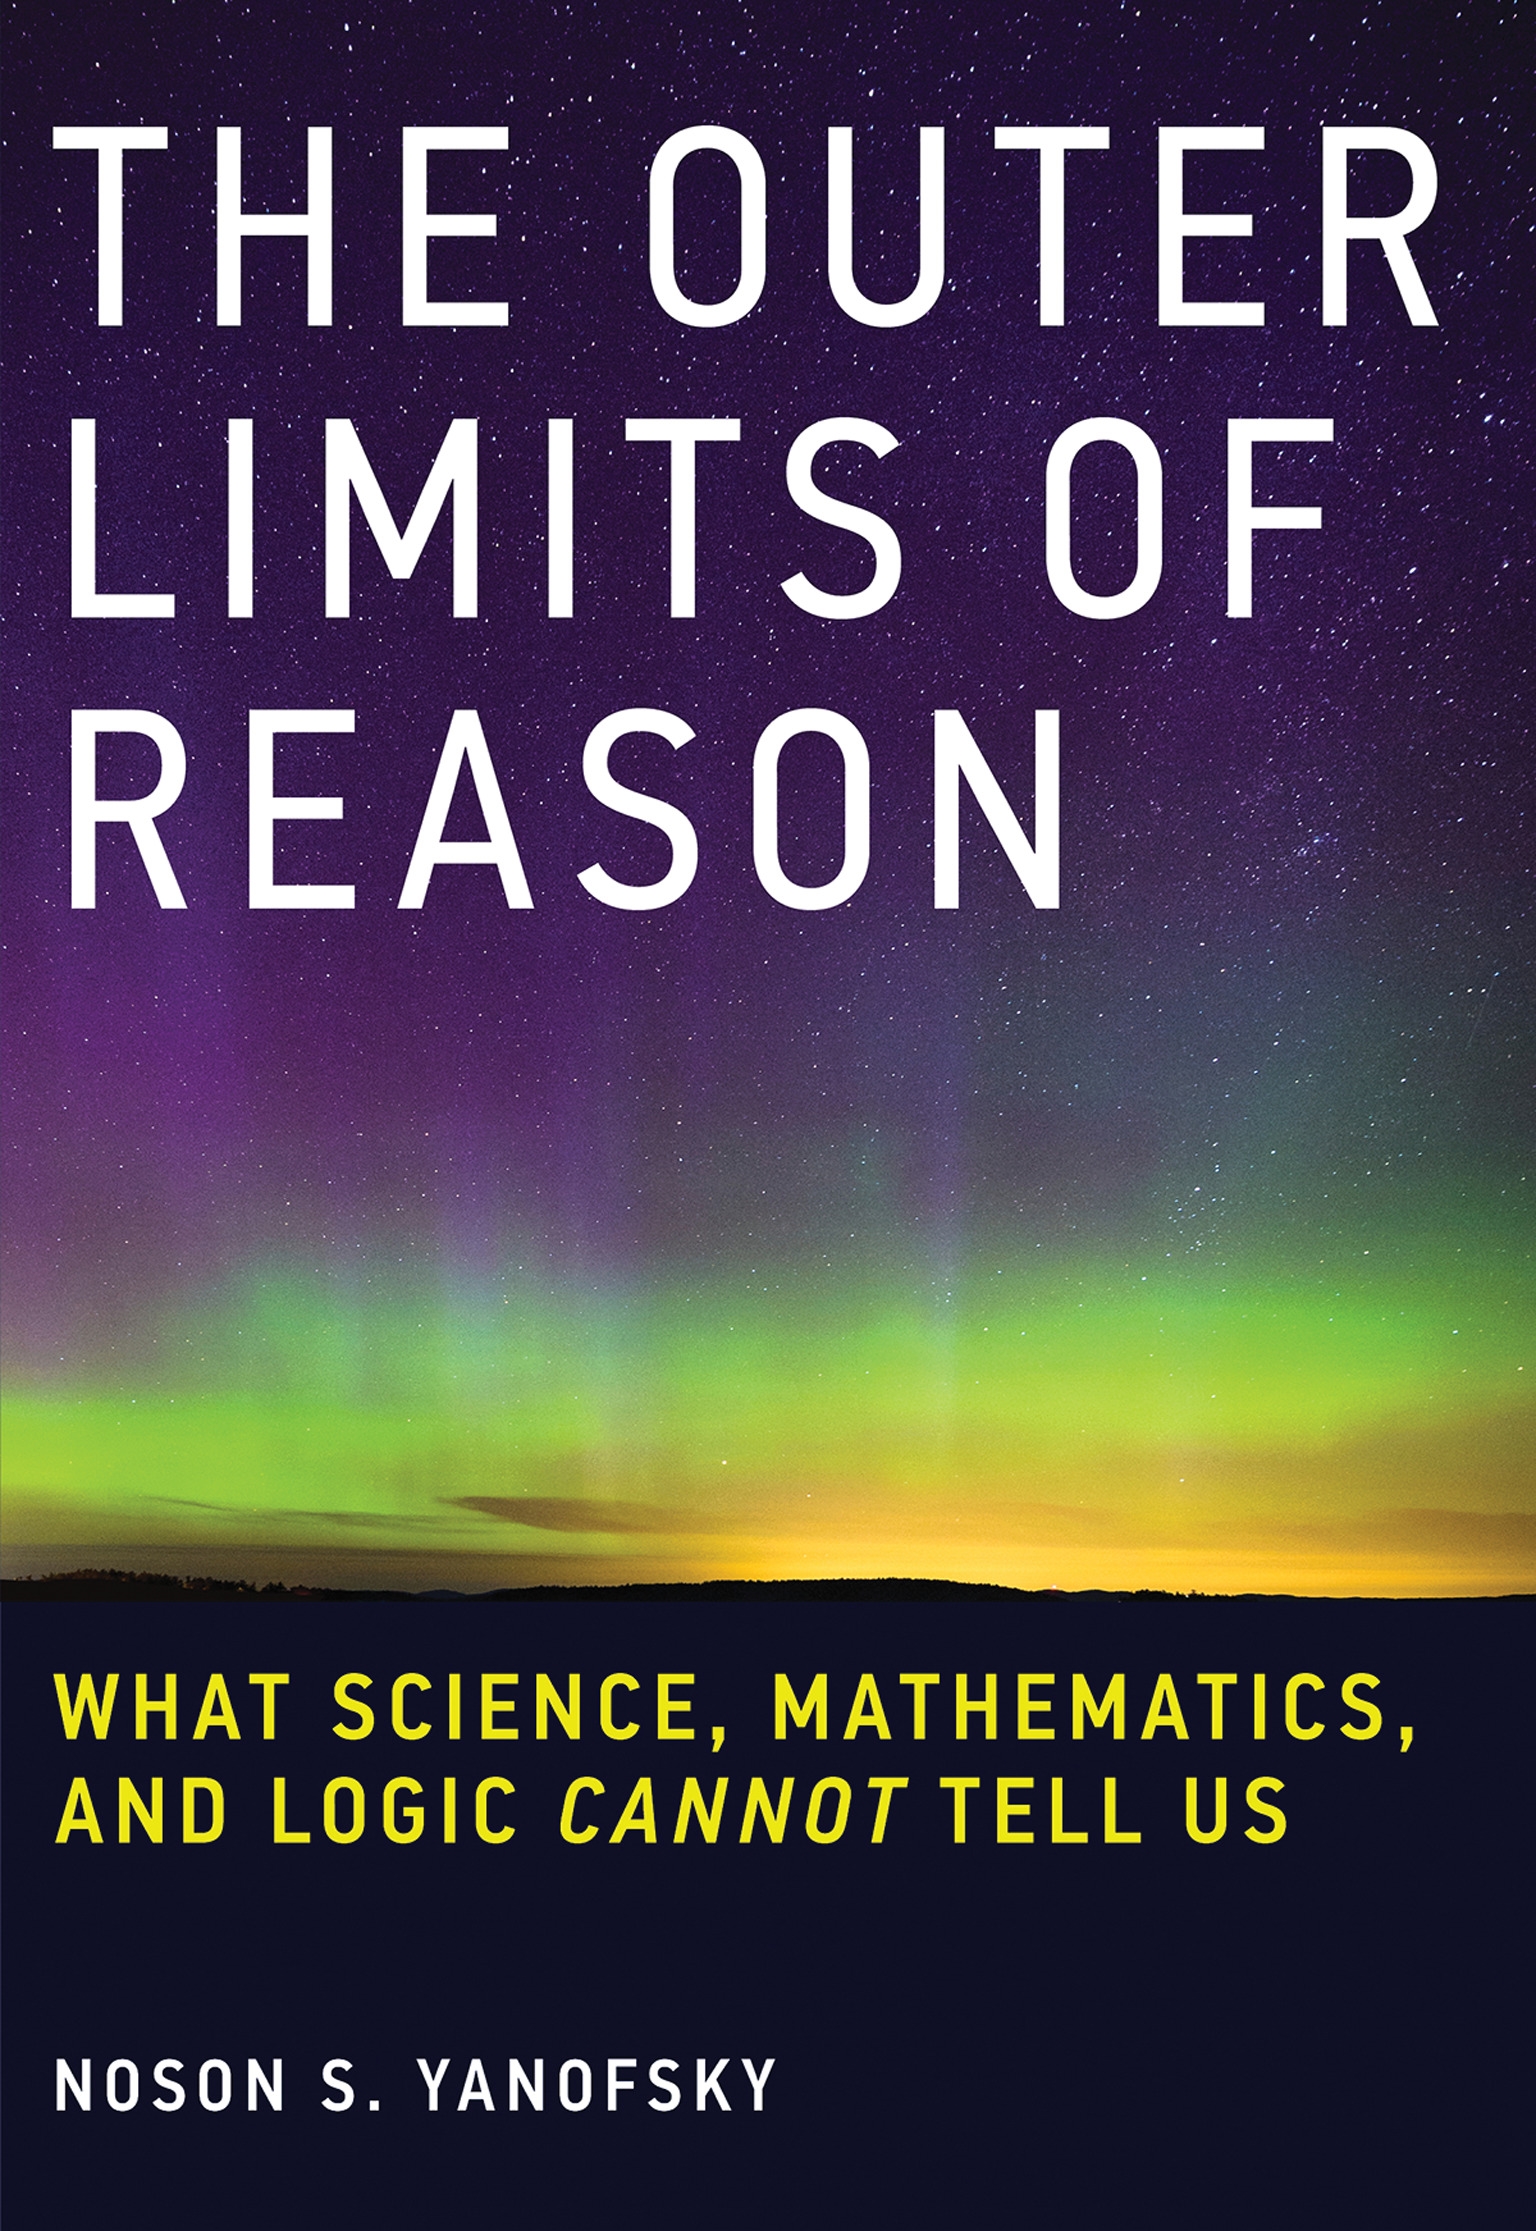 The Outer Limits of Reason by Noson S. Yanofsky - Penguin Books Australia